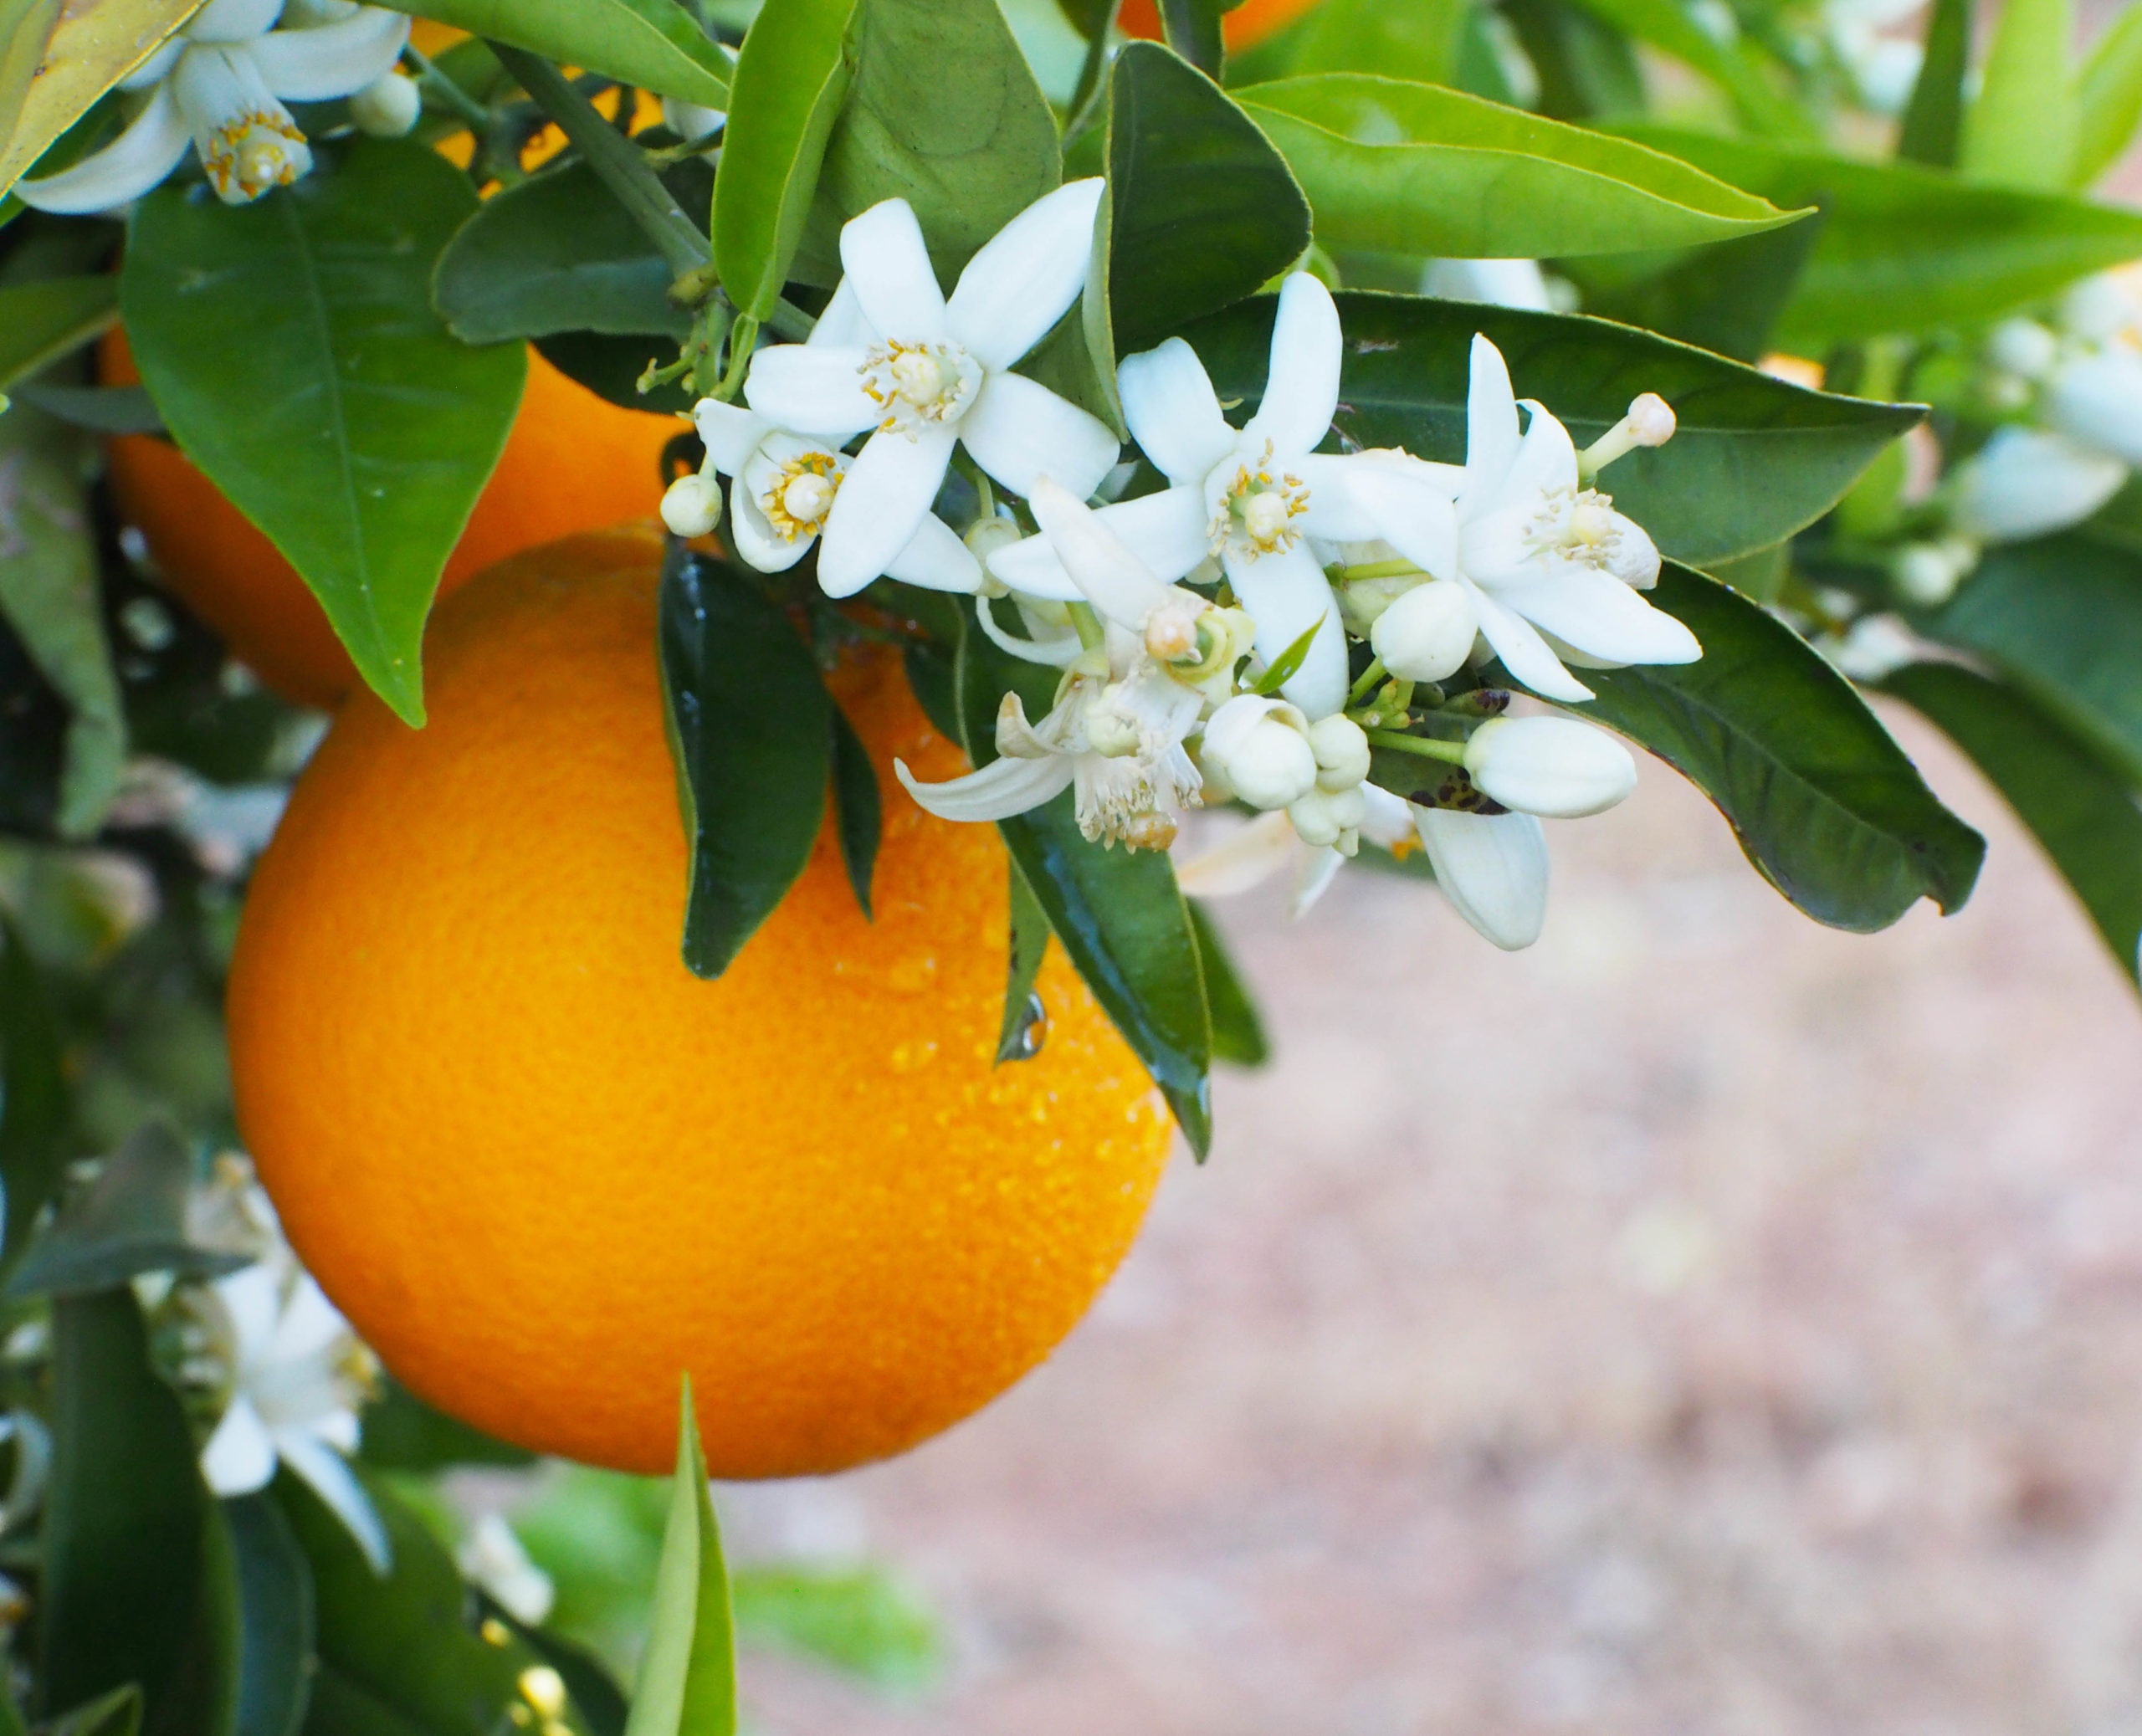 Harvesting Citrus in the Home Garden: Preharvest Care